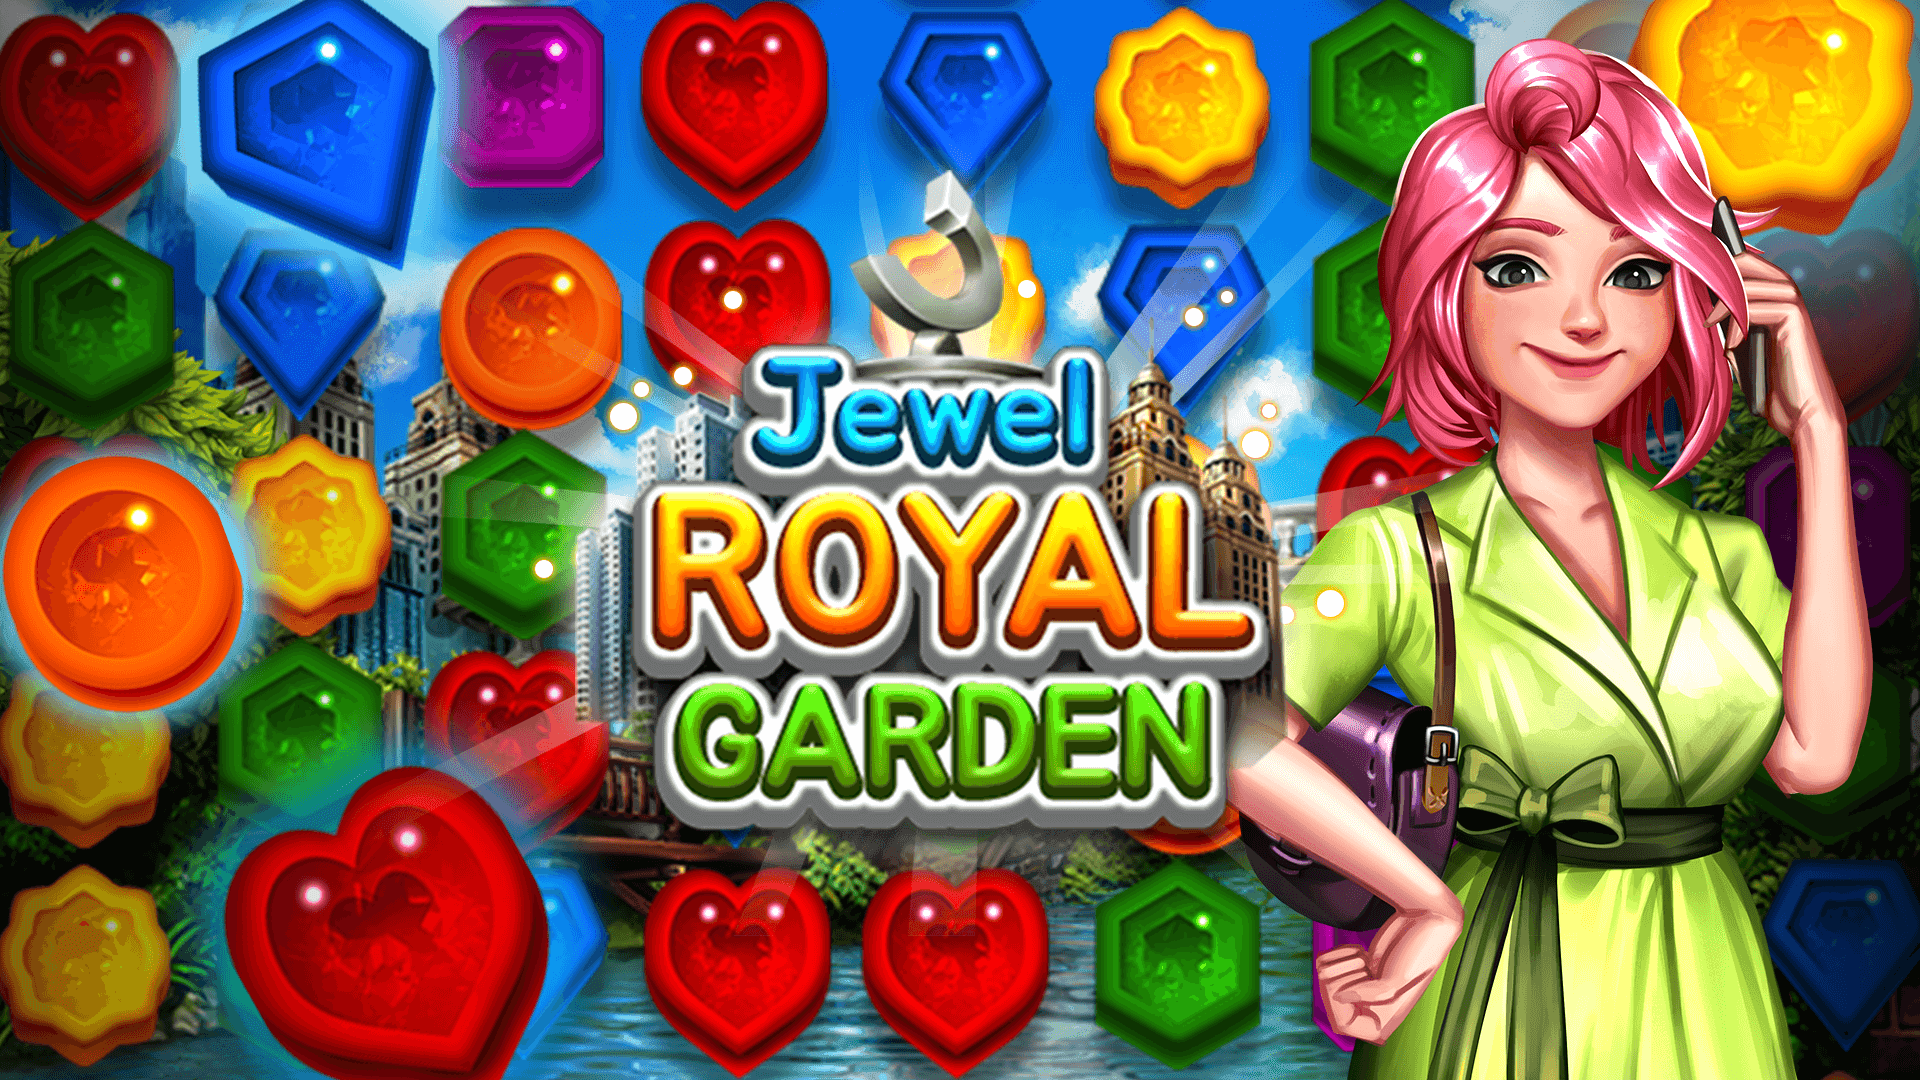 Screenshot 1 of Jewel Royal Garden: Tugma 3 1.7.8